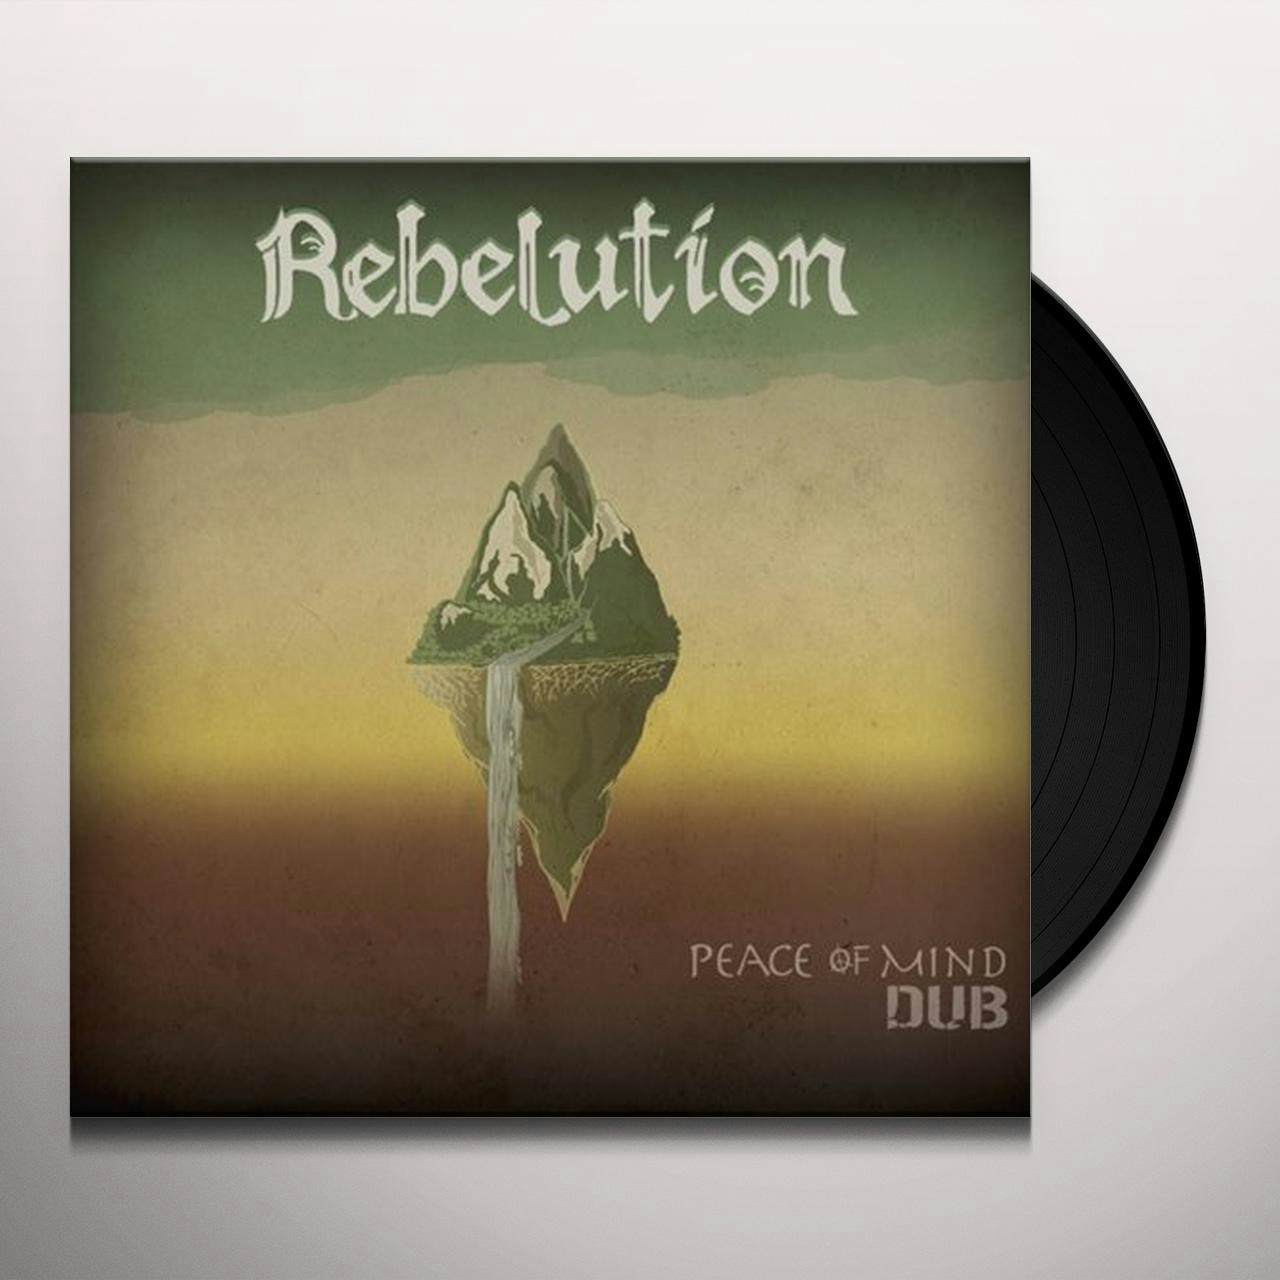 rebelution album cover